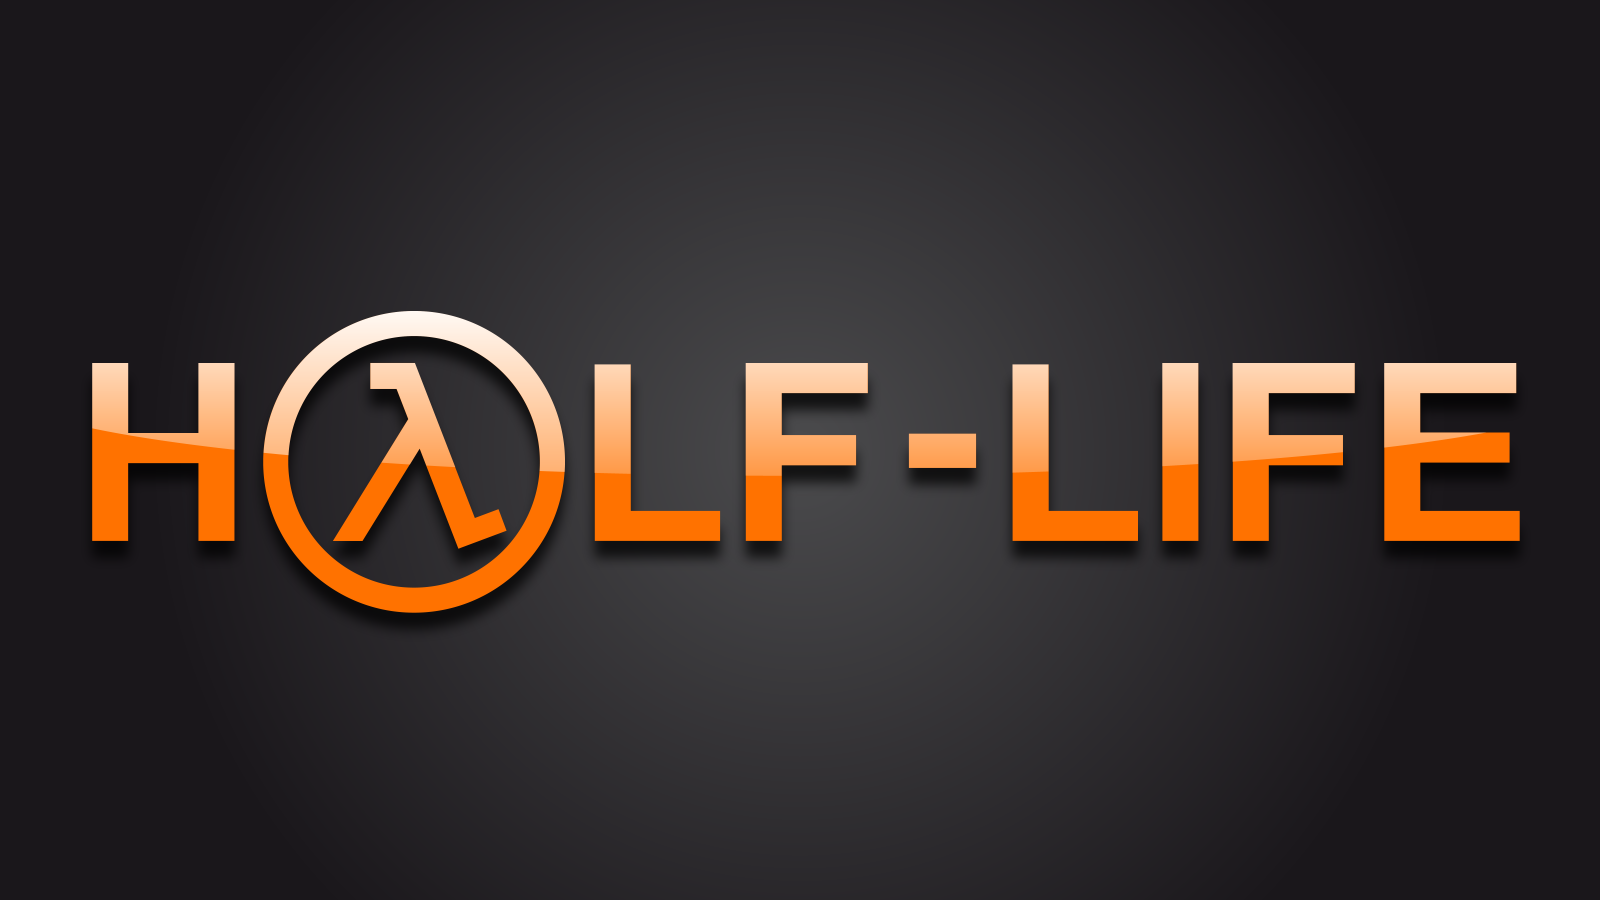 Half life название. Half Life 2 логотип. Half Life надпись. Халф лайф 2 надпись. Half Life 1 логотип.